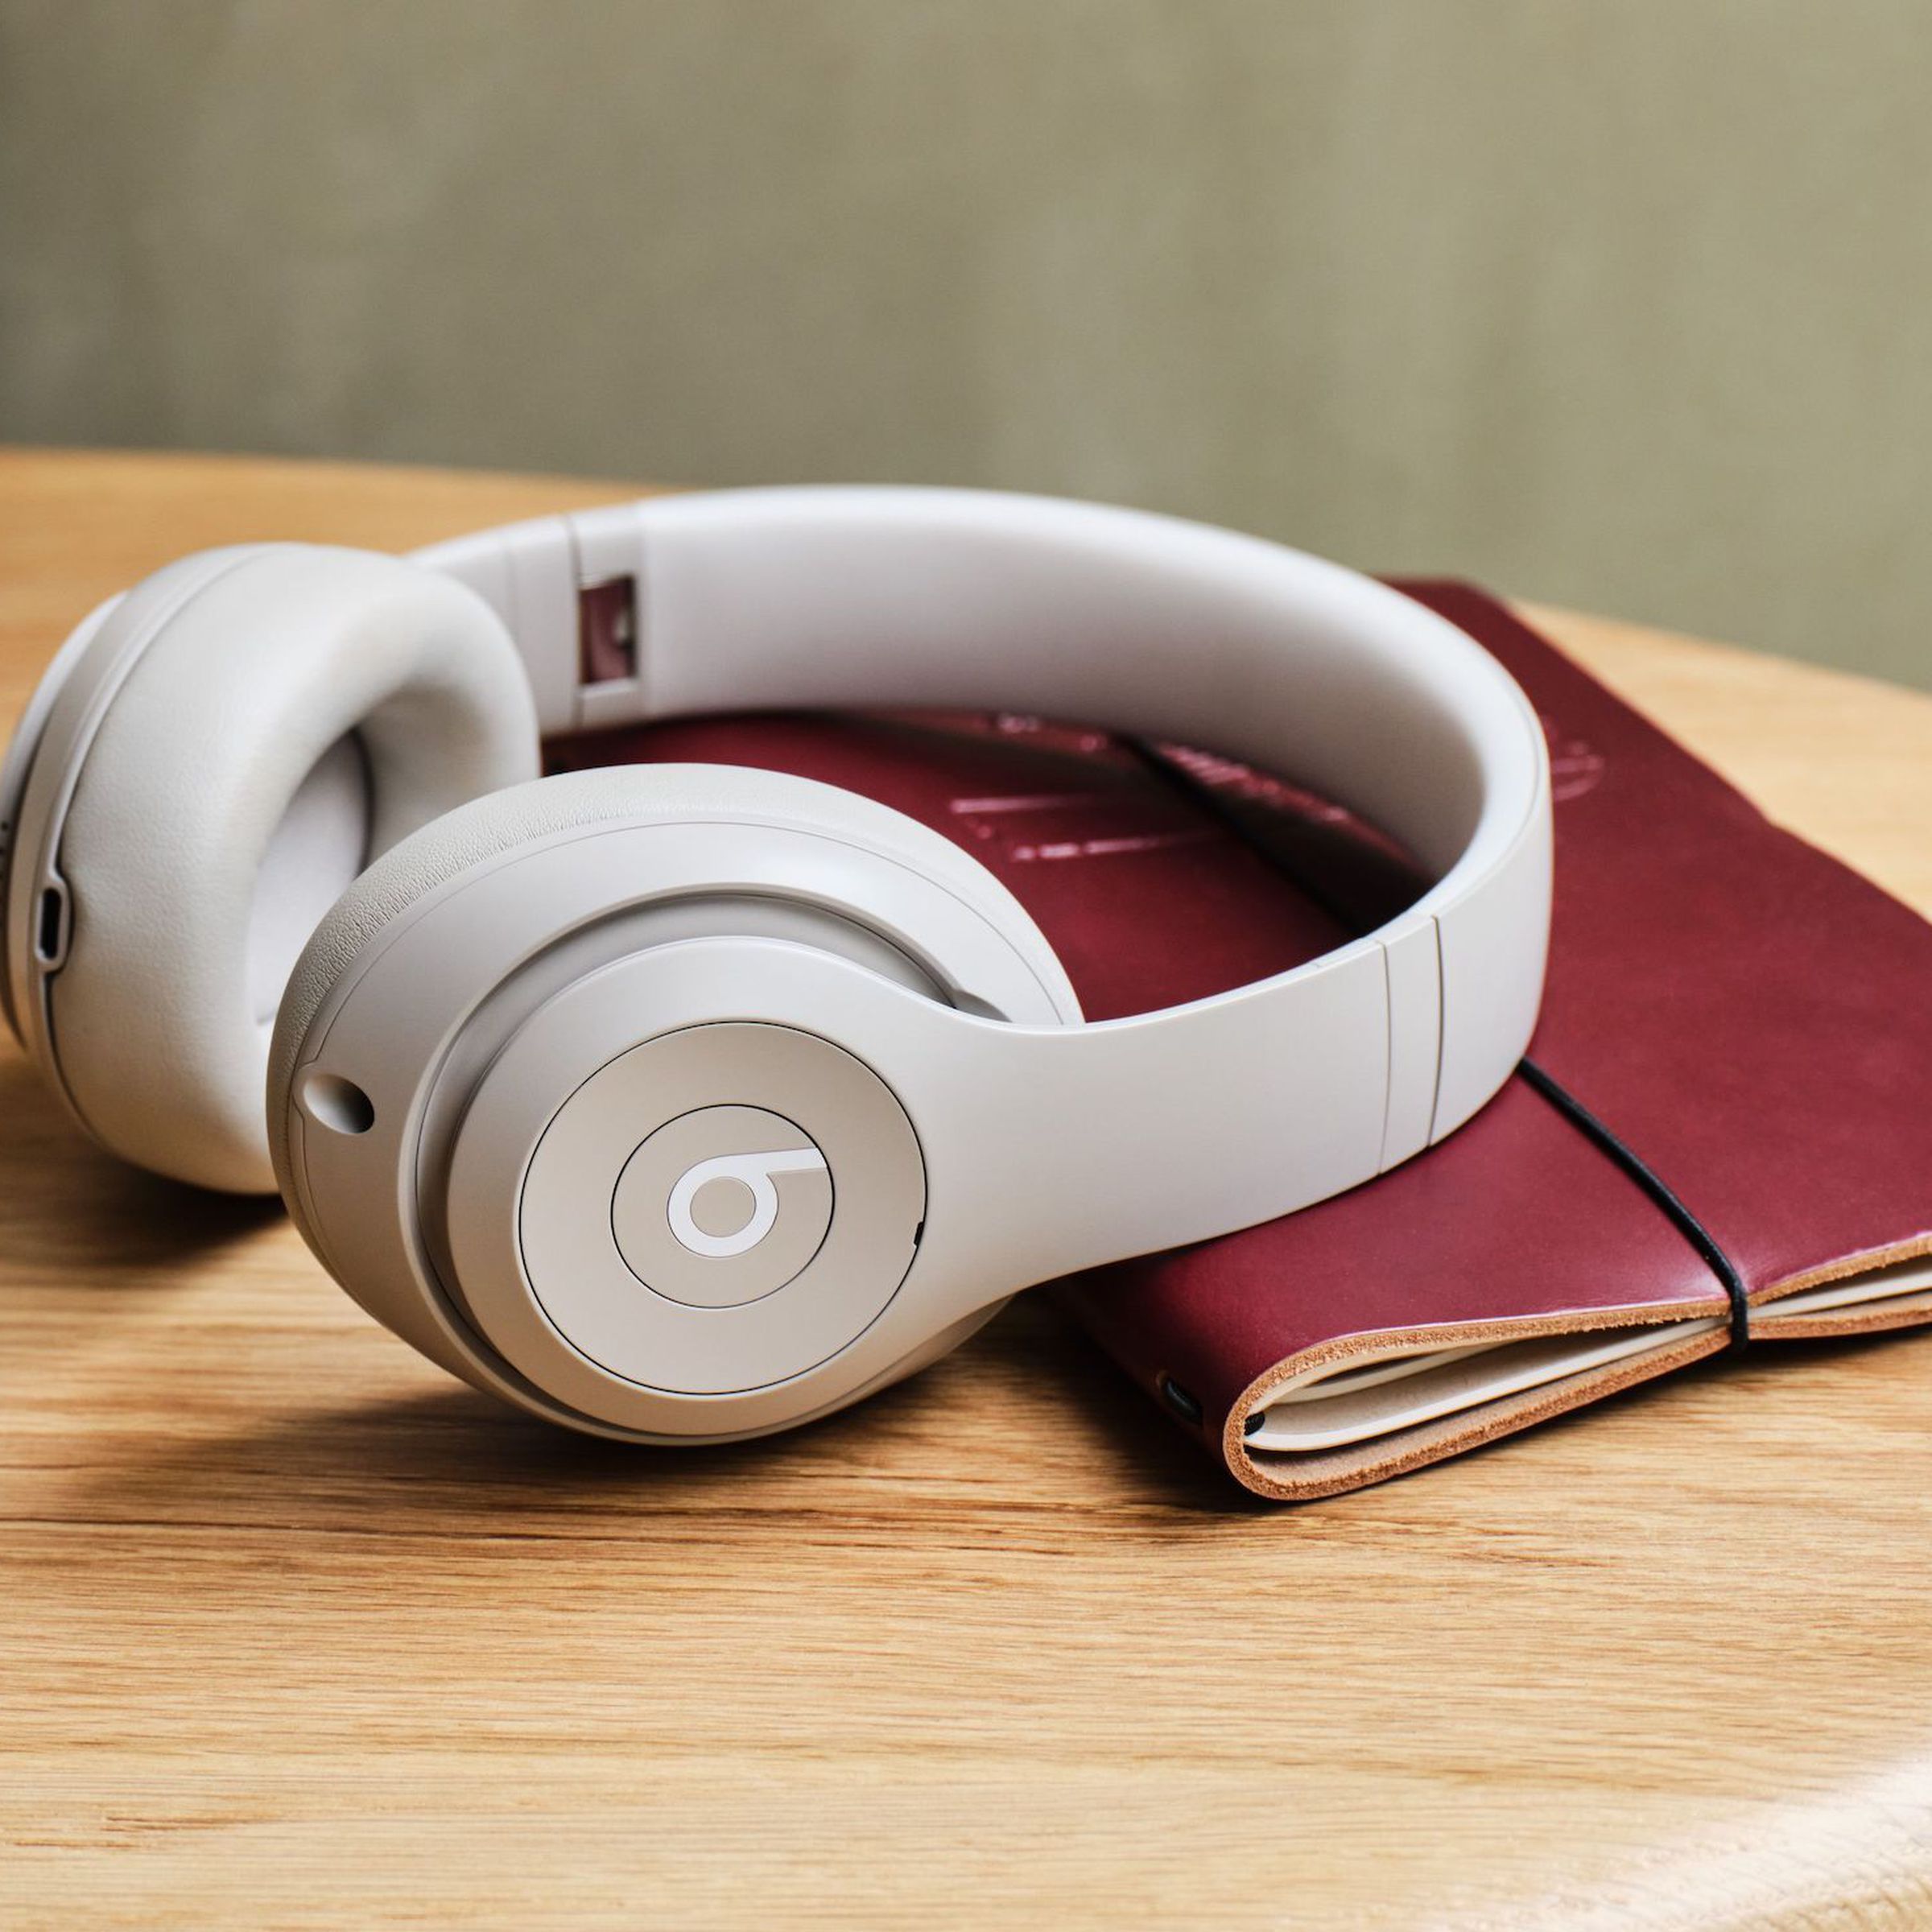 A marketing photo of the Beats Studio Pro headphones.